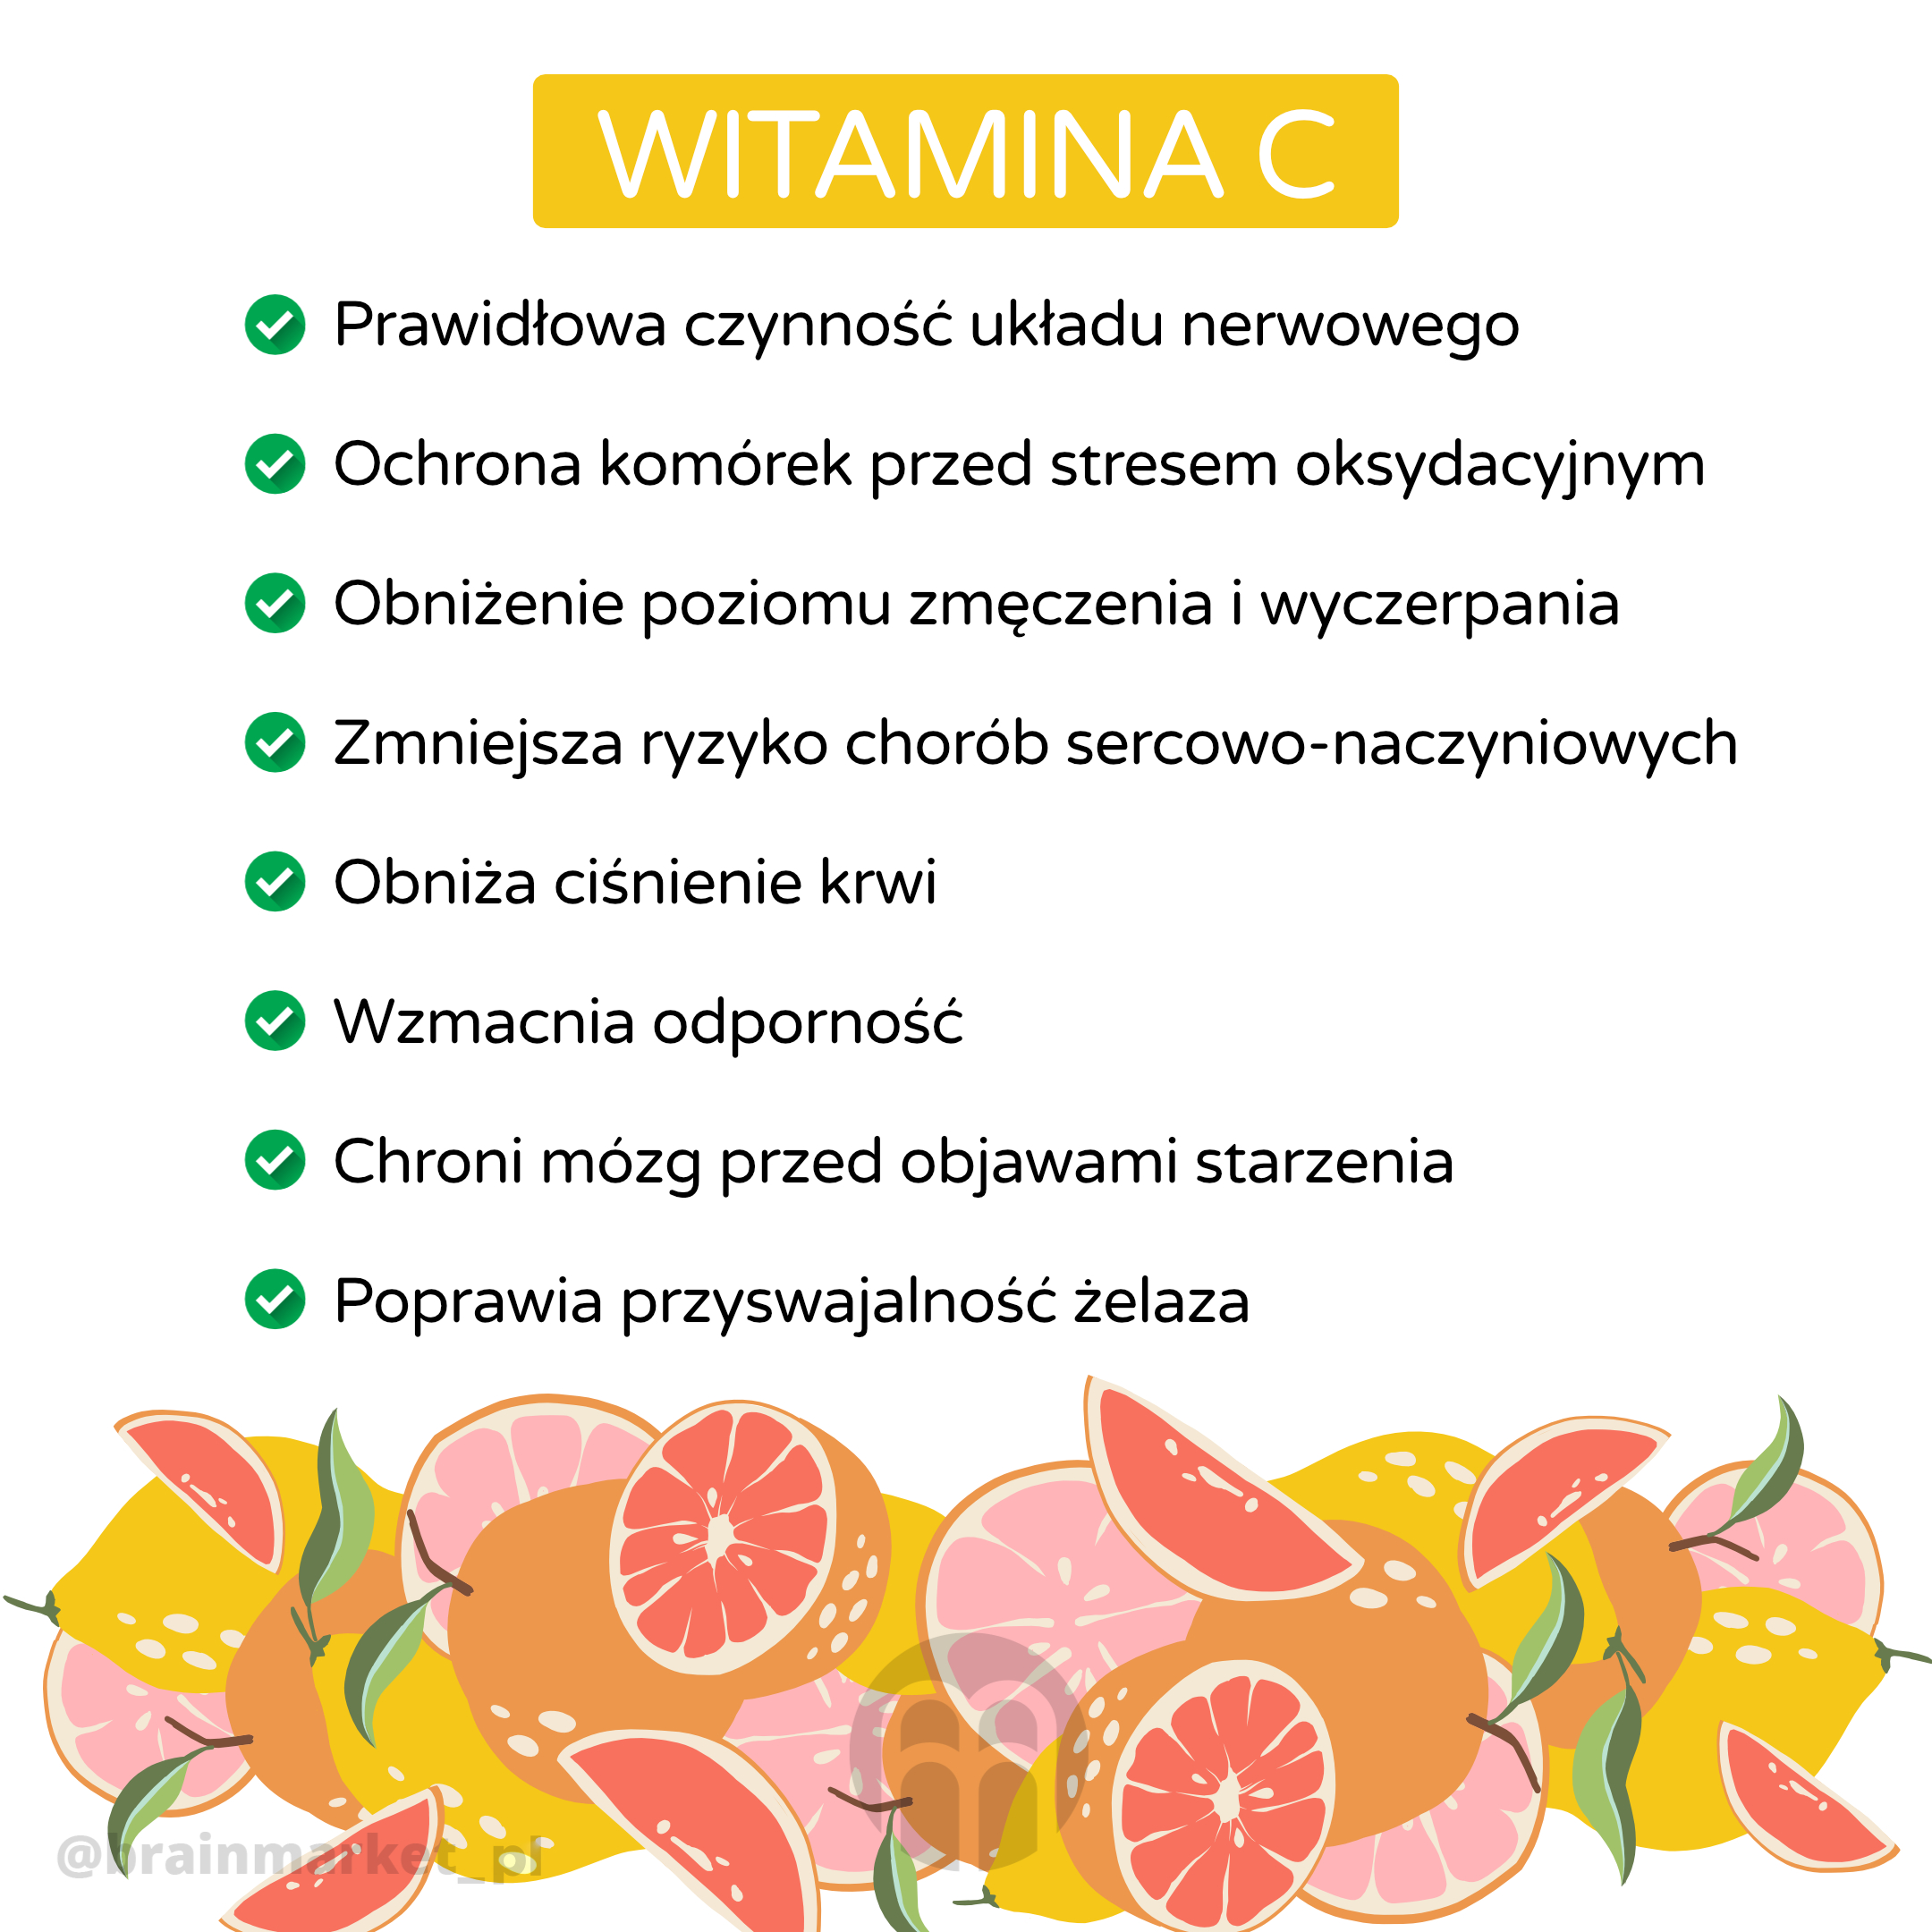 vitamin C_infografika_pl